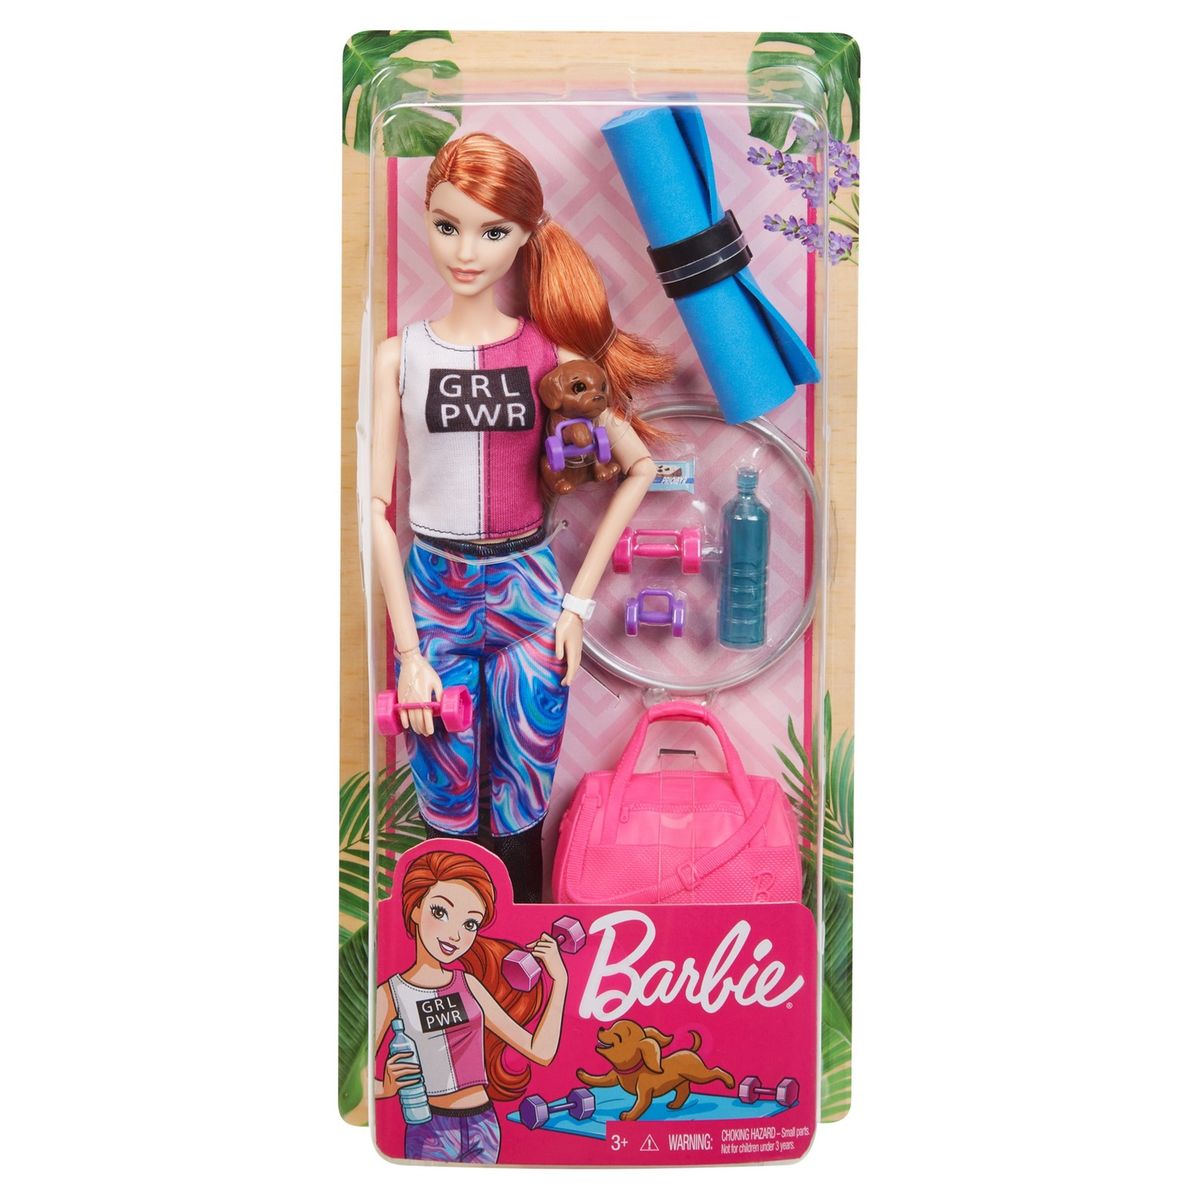 BARBIE Mobilier Barbie et sa Piscine